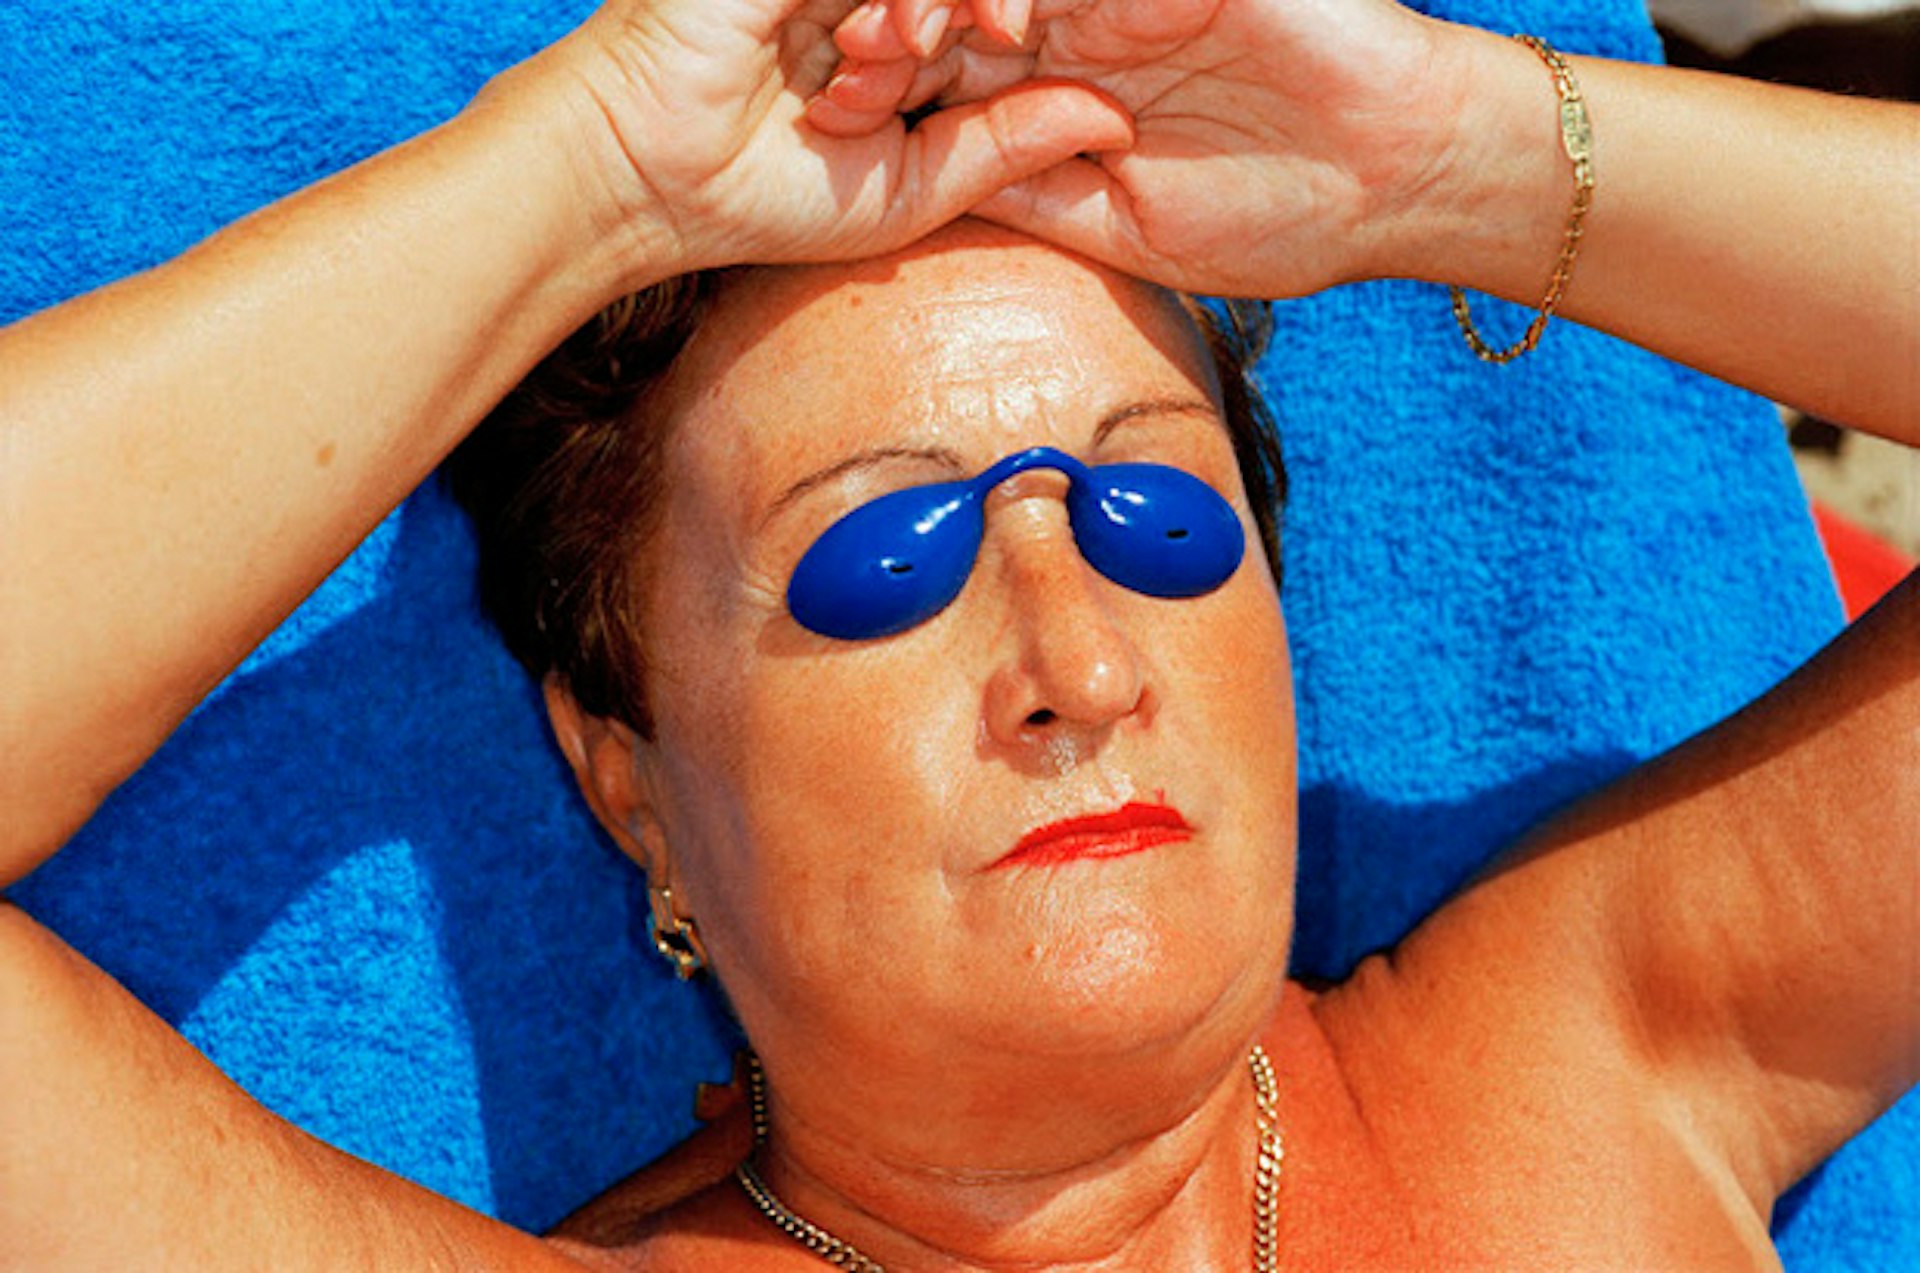 martin-parr-common-sense-woman-sunbathing-spain-1997